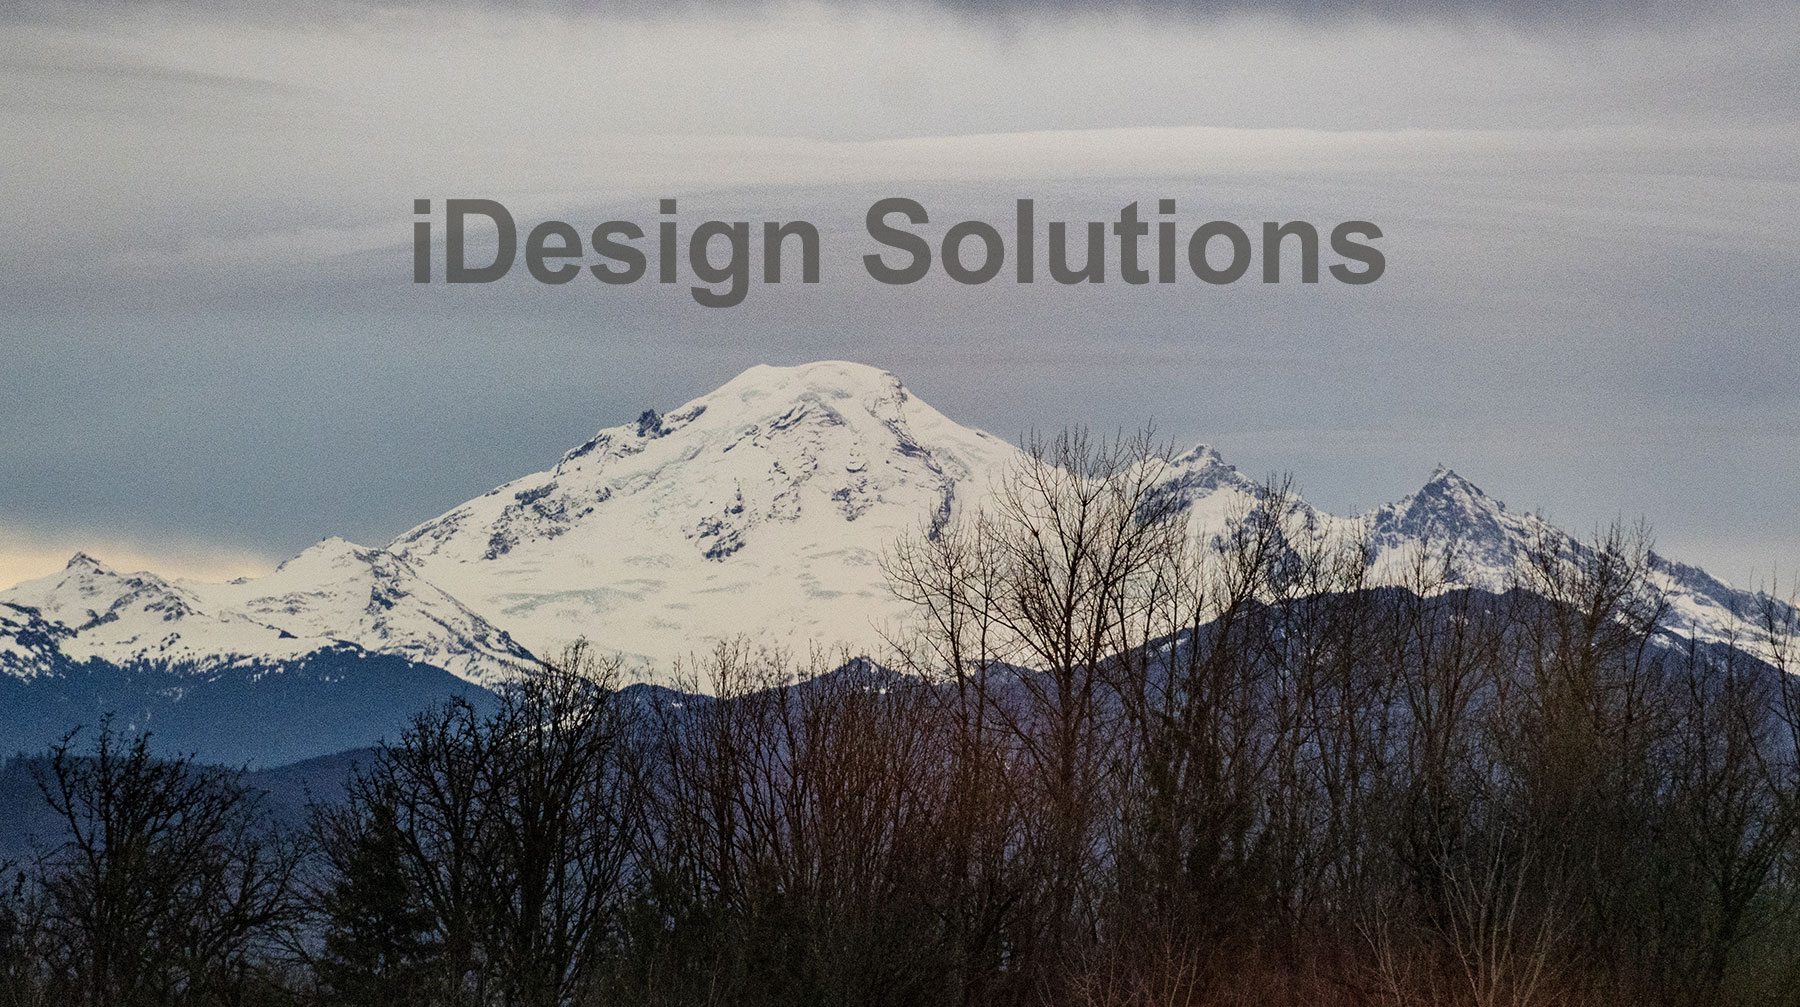 iDesign Solutions at Mt. Baker